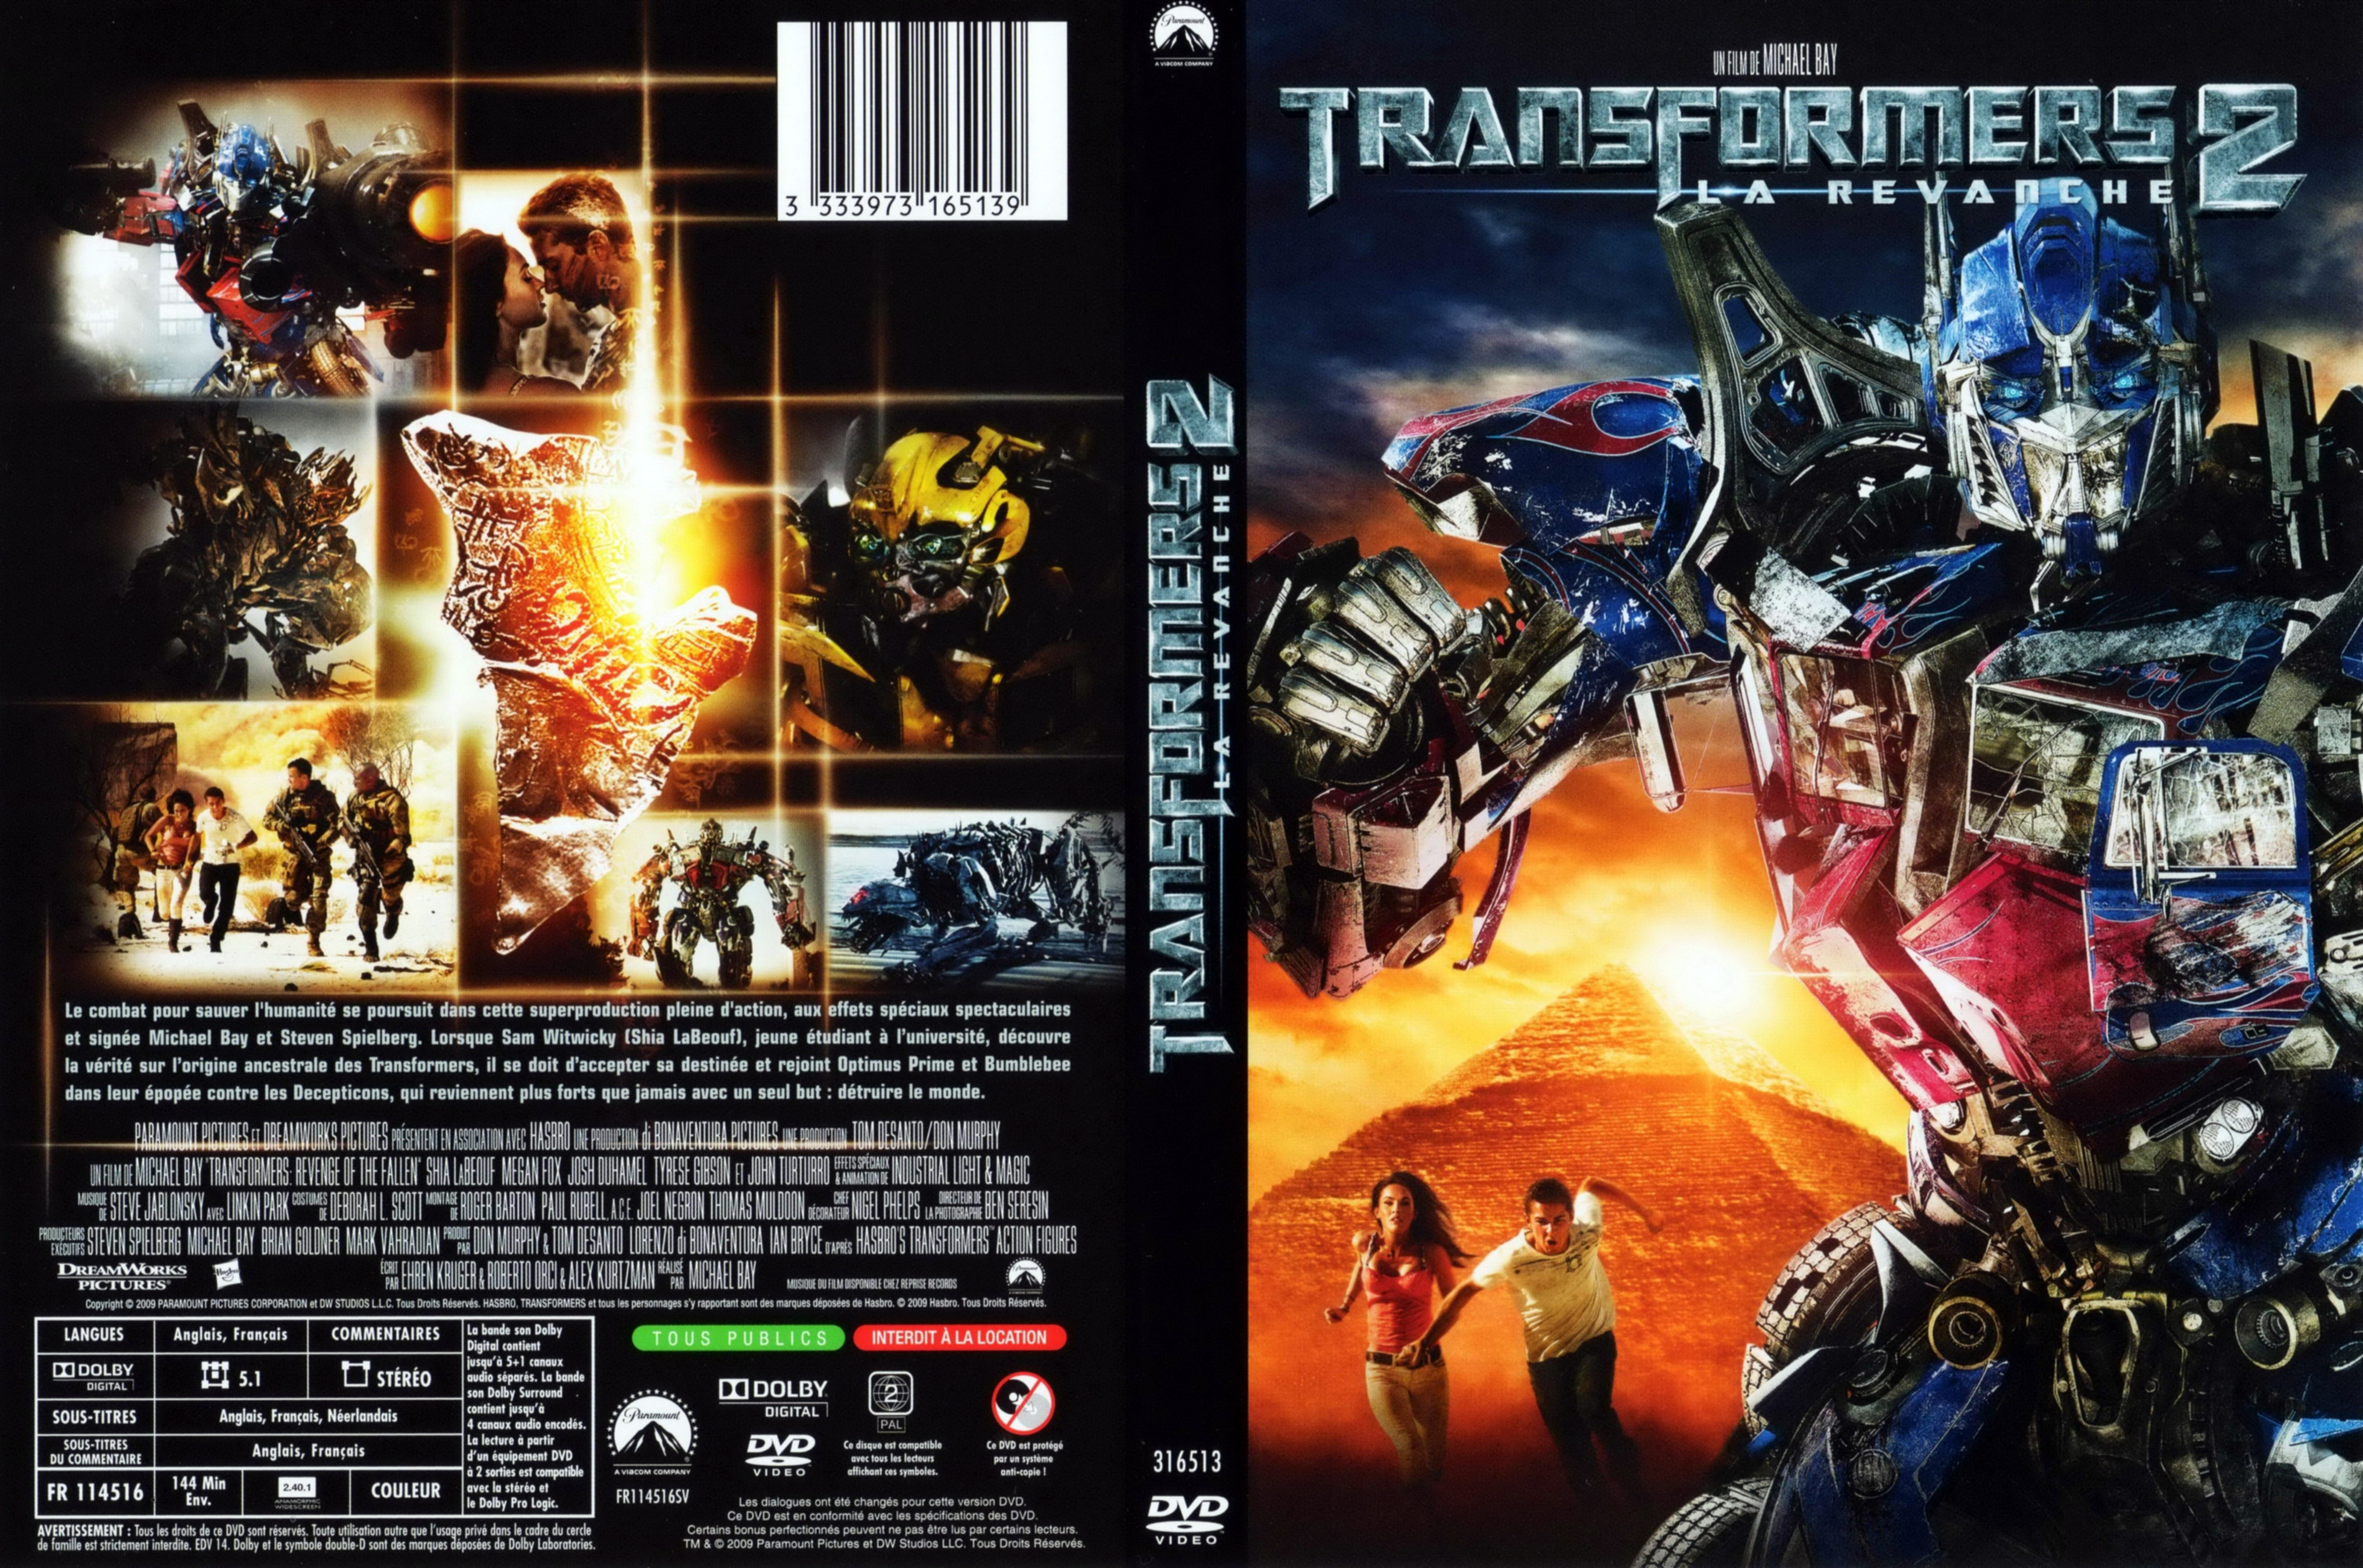 Jaquette DVD Transformers 2 v3